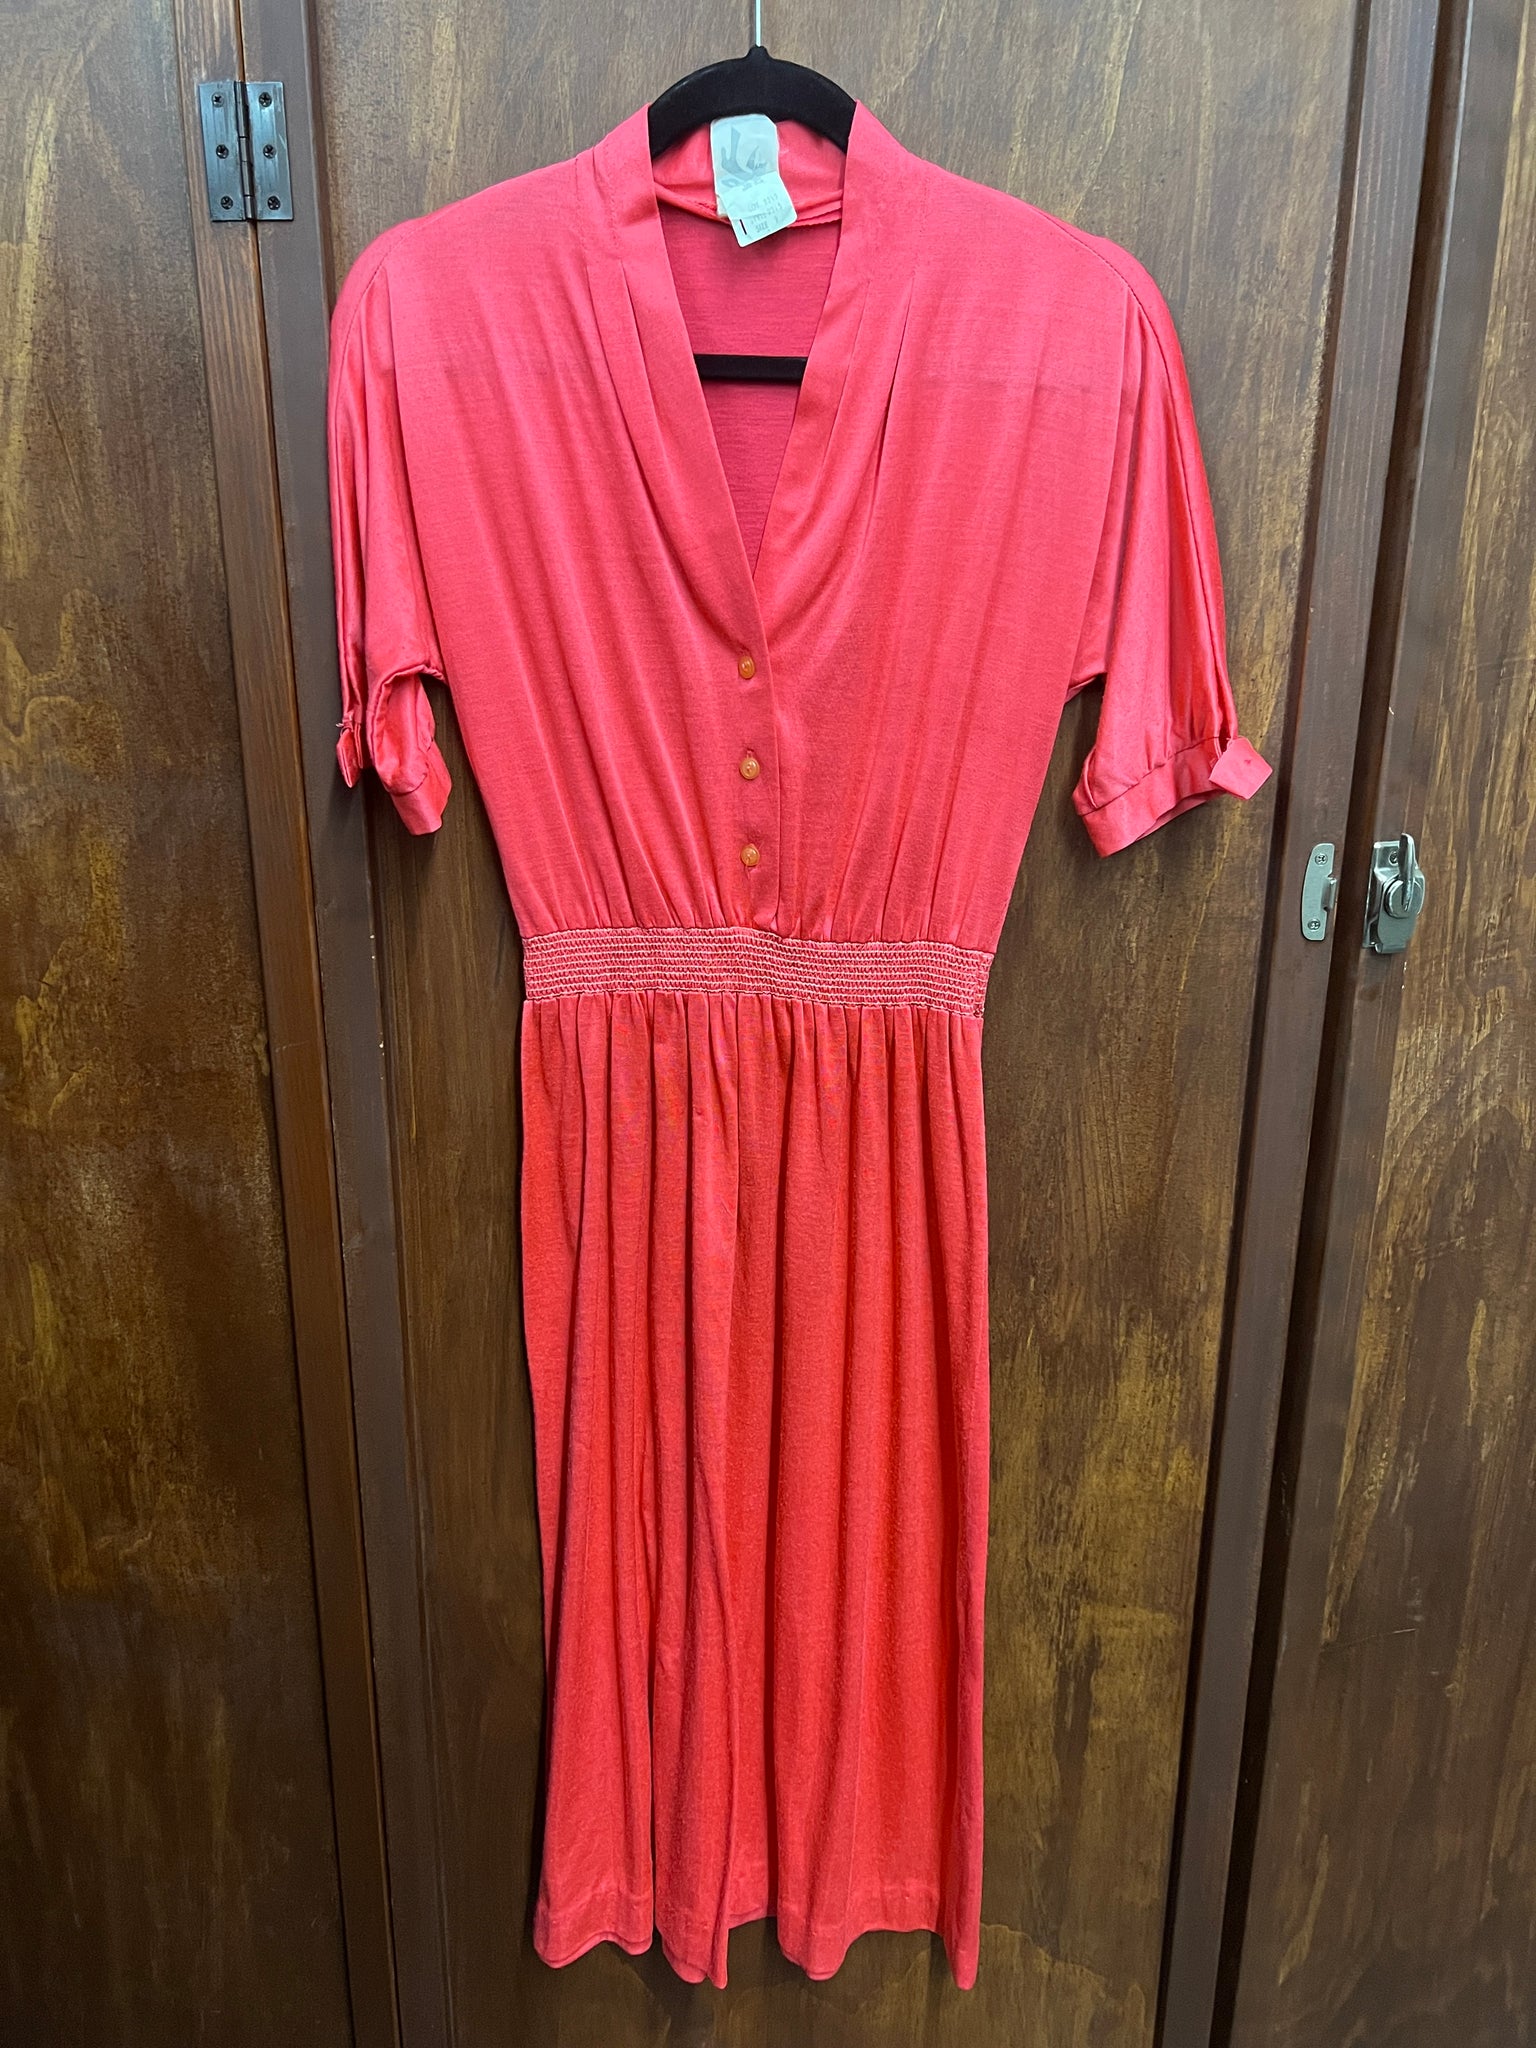 1970s -DRESS- Jody T deep pink knit dress vneck